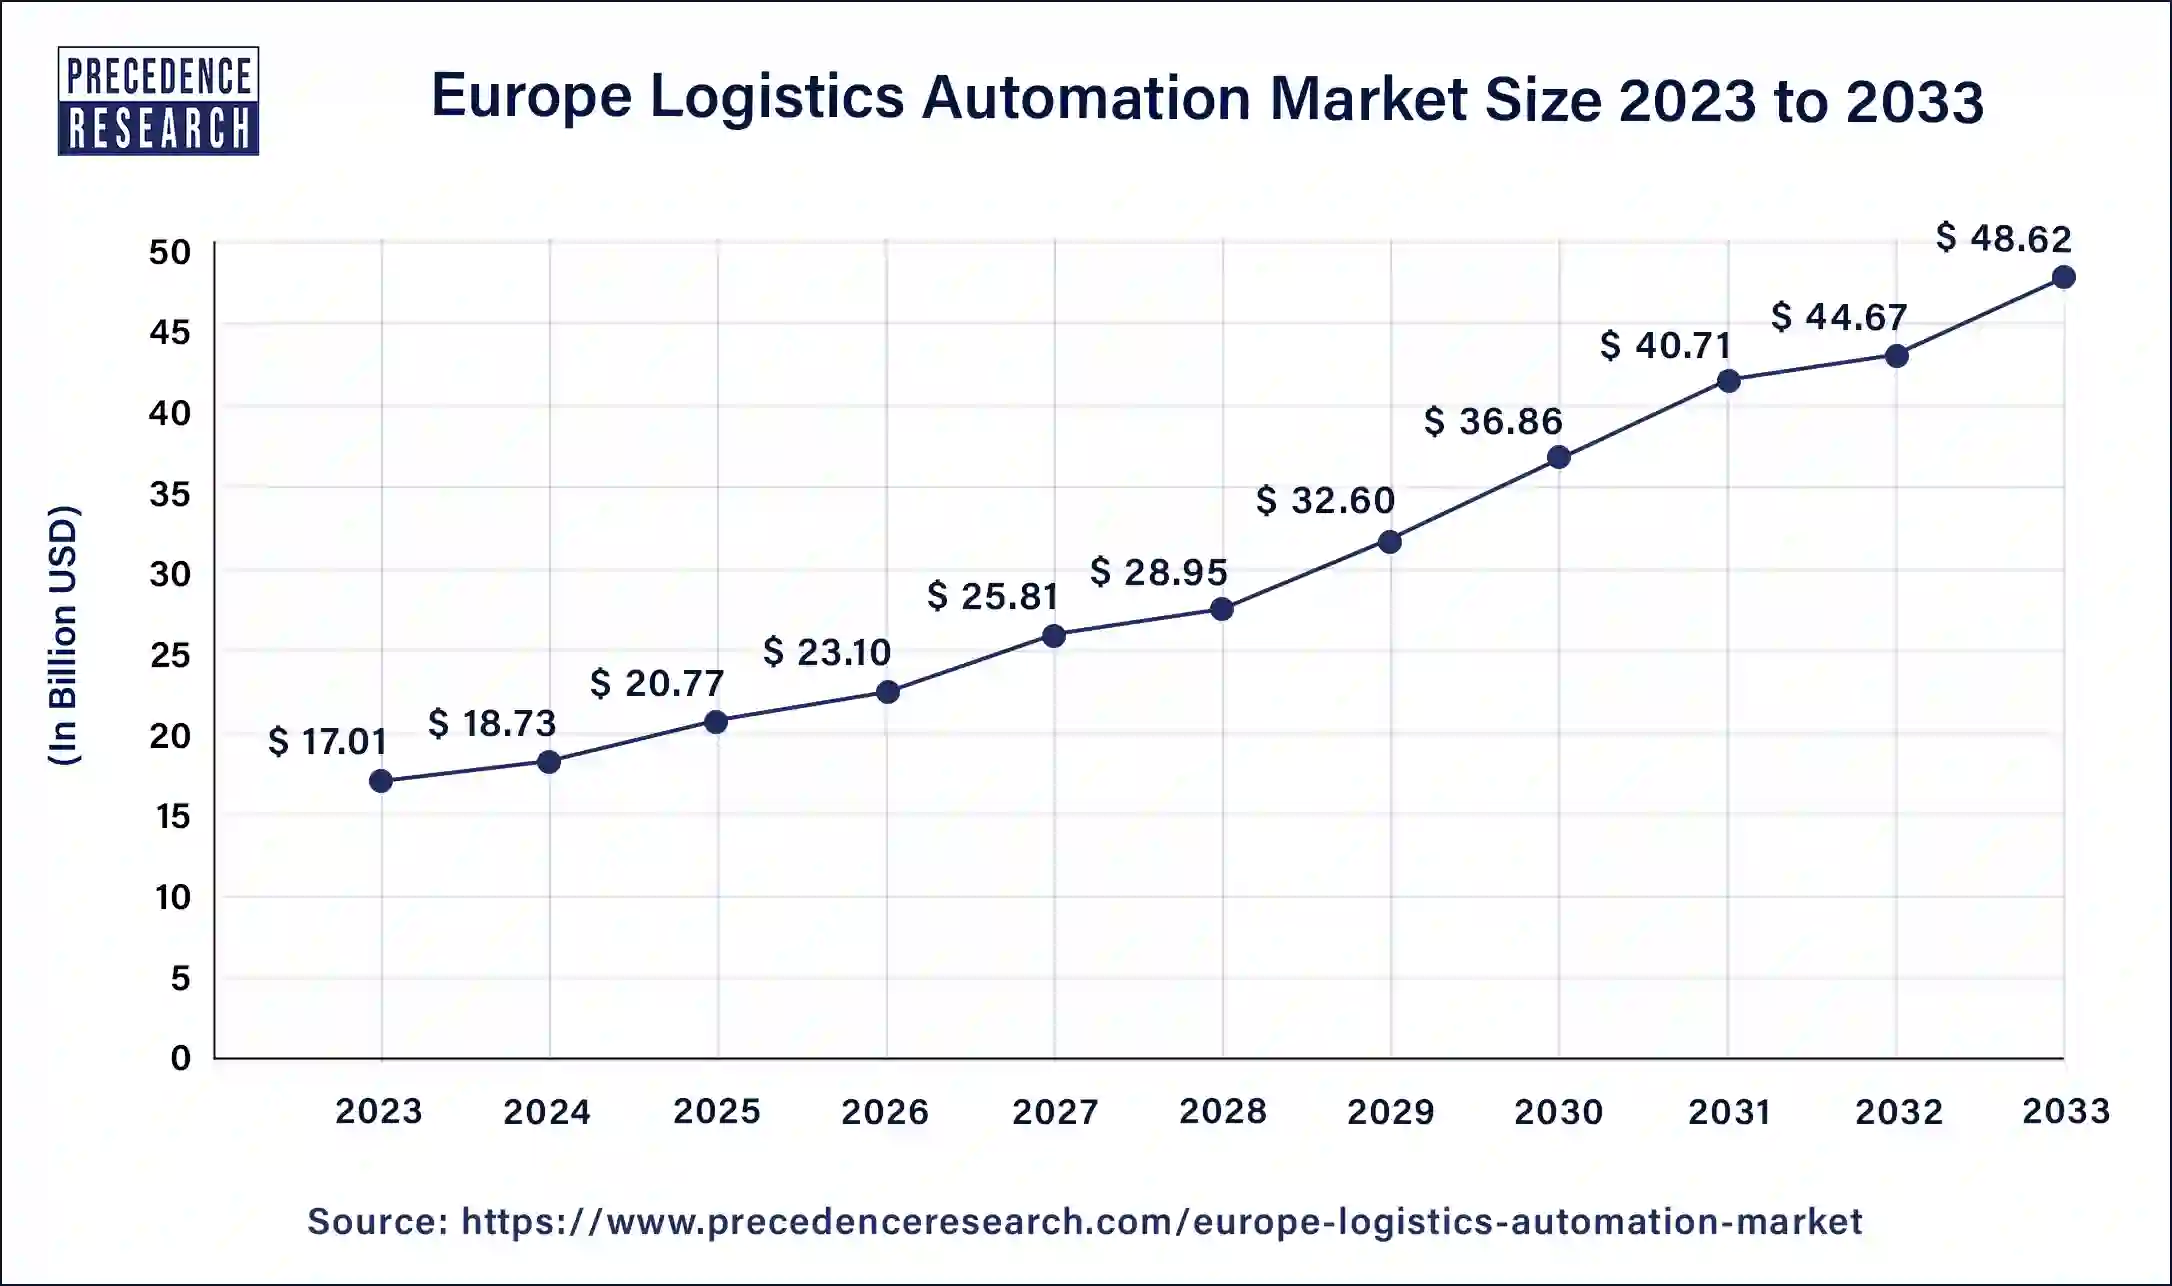 Europe Logistics Automation Market Size 2023 to 2033